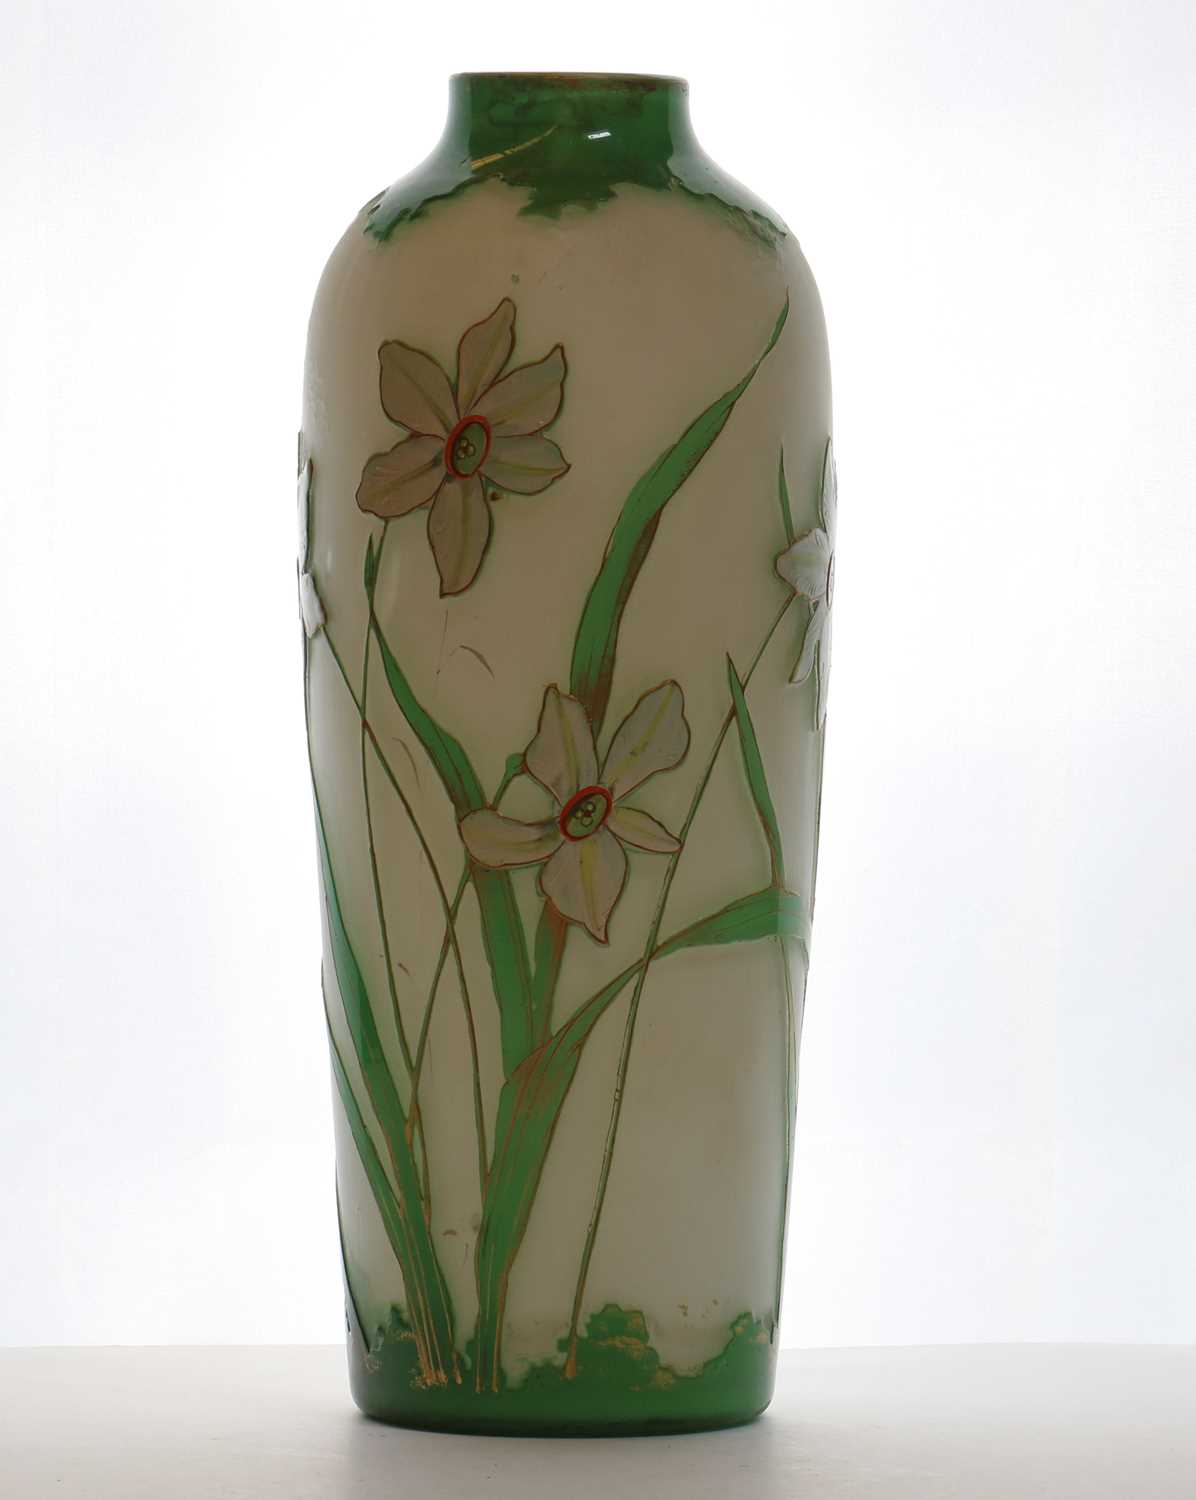 A cameo glass vase